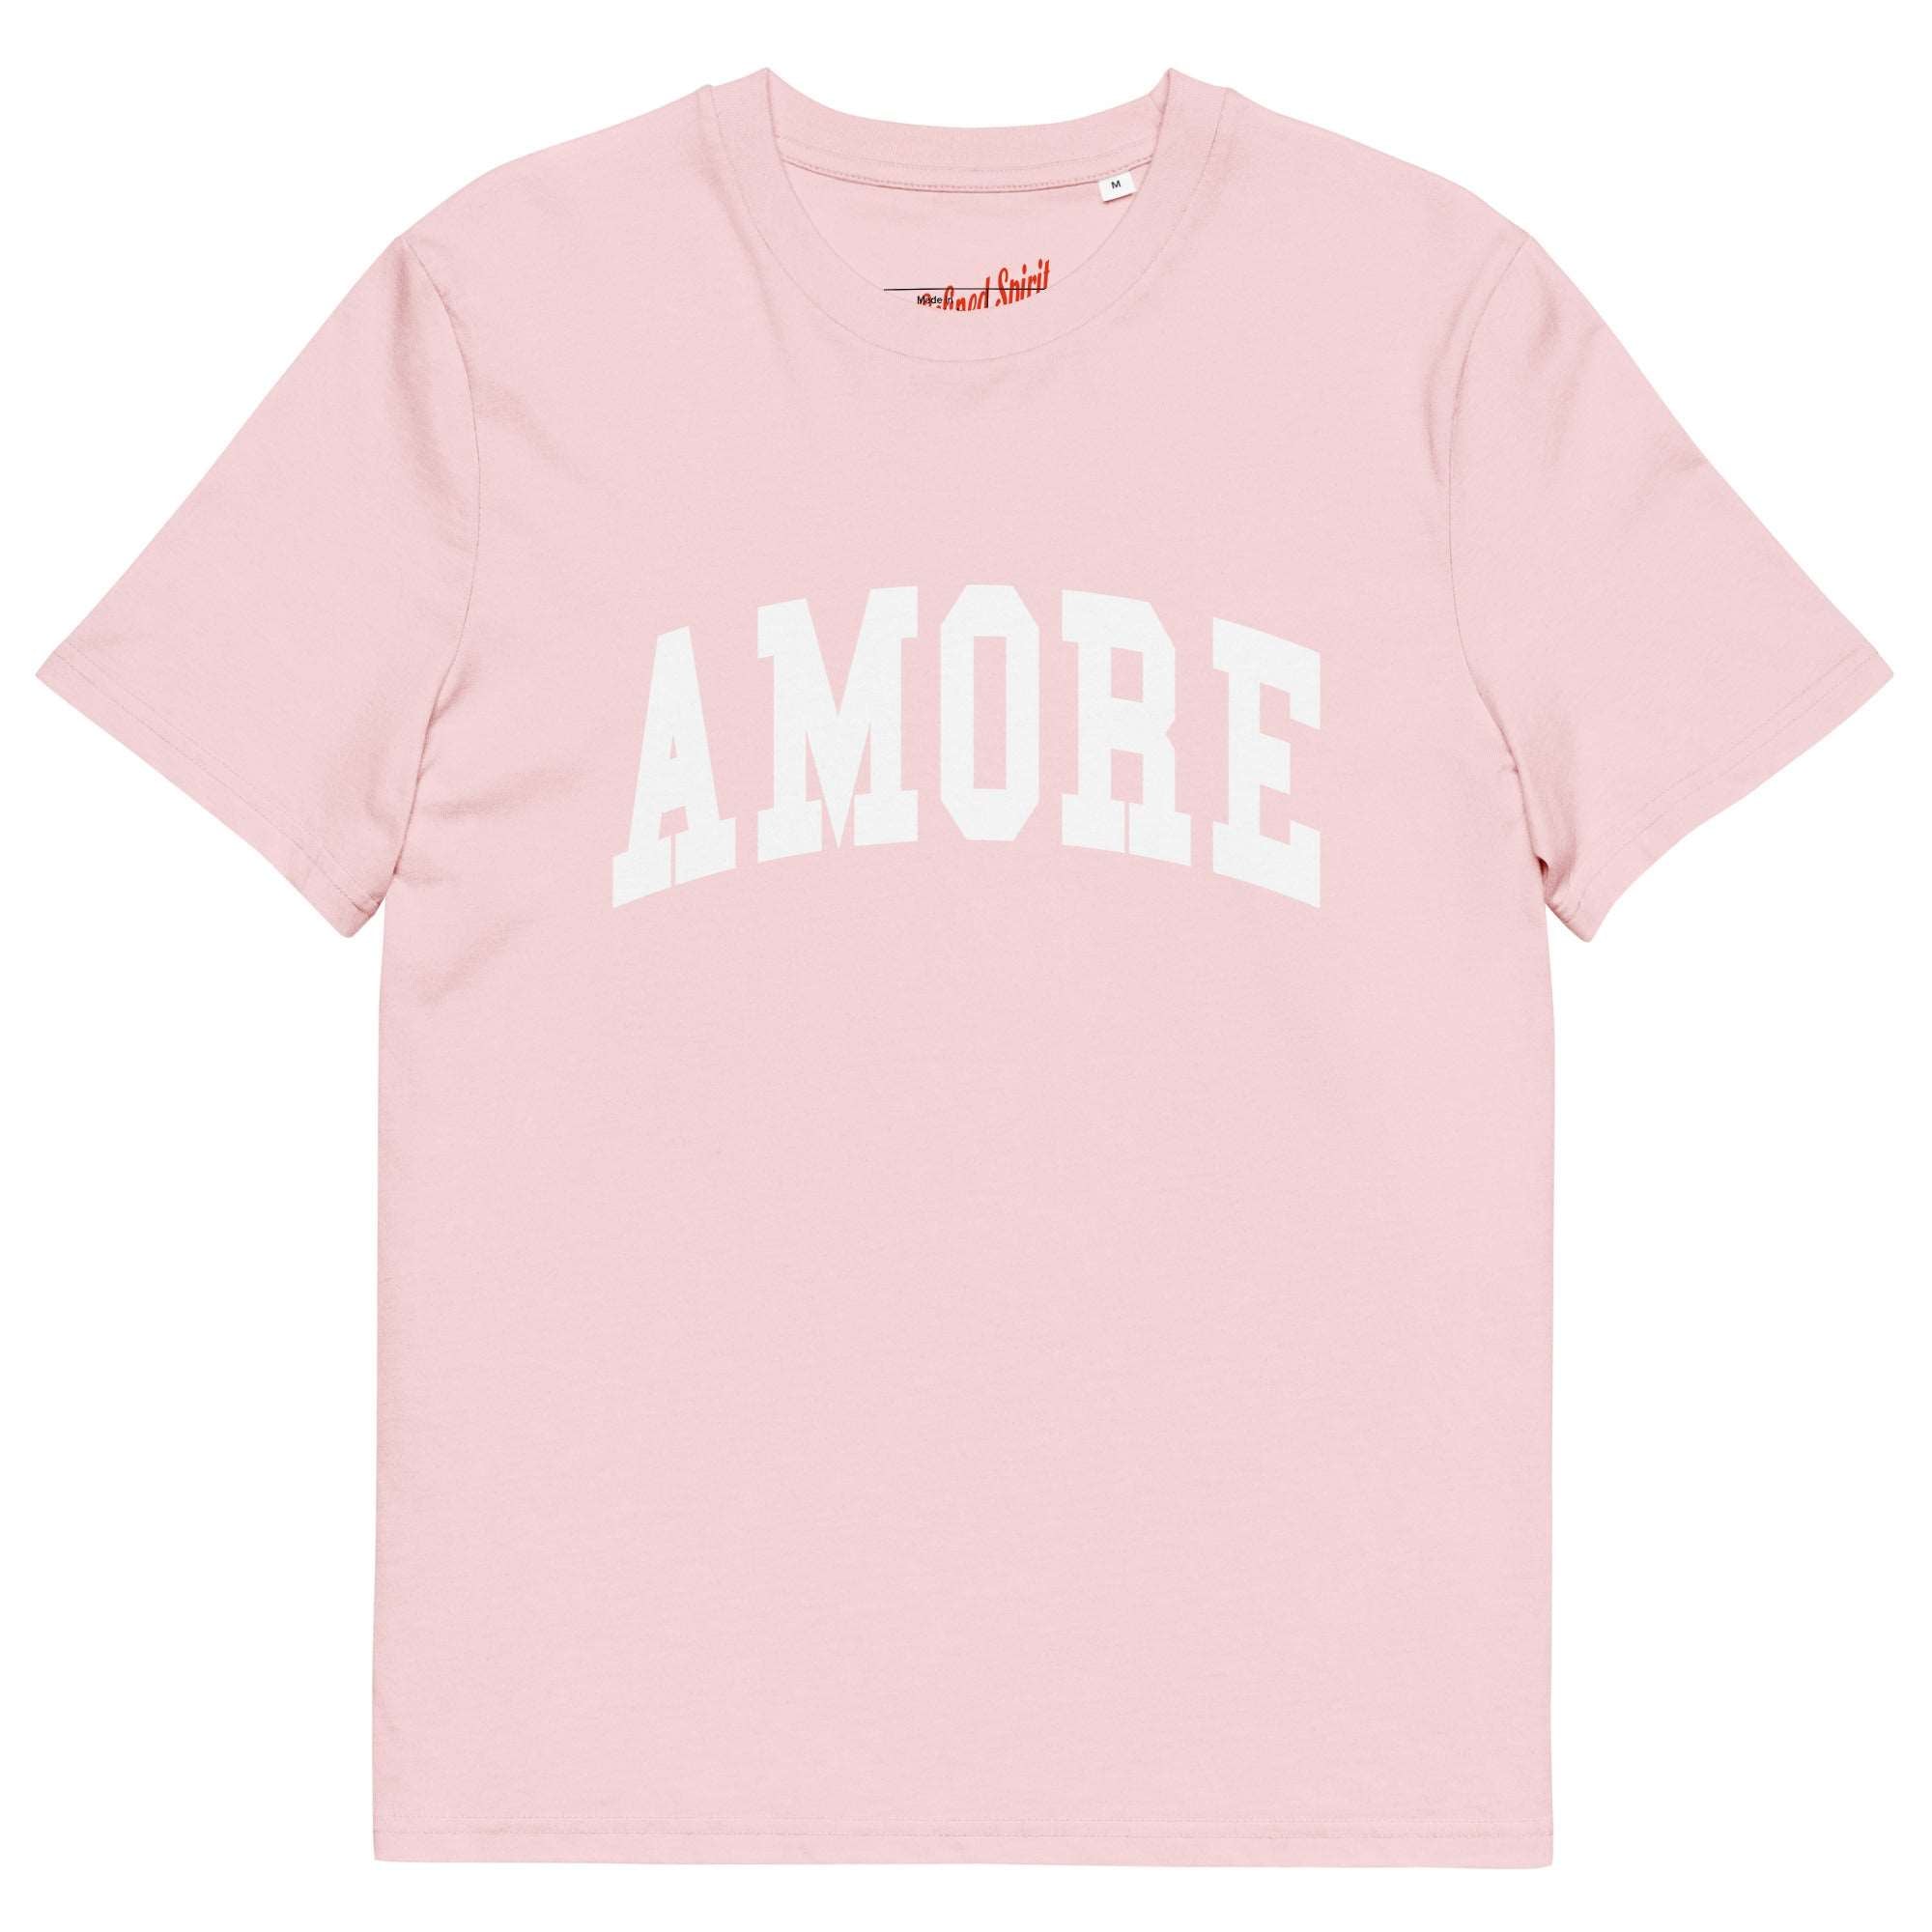 Amore - Unisex Organic T-shirt